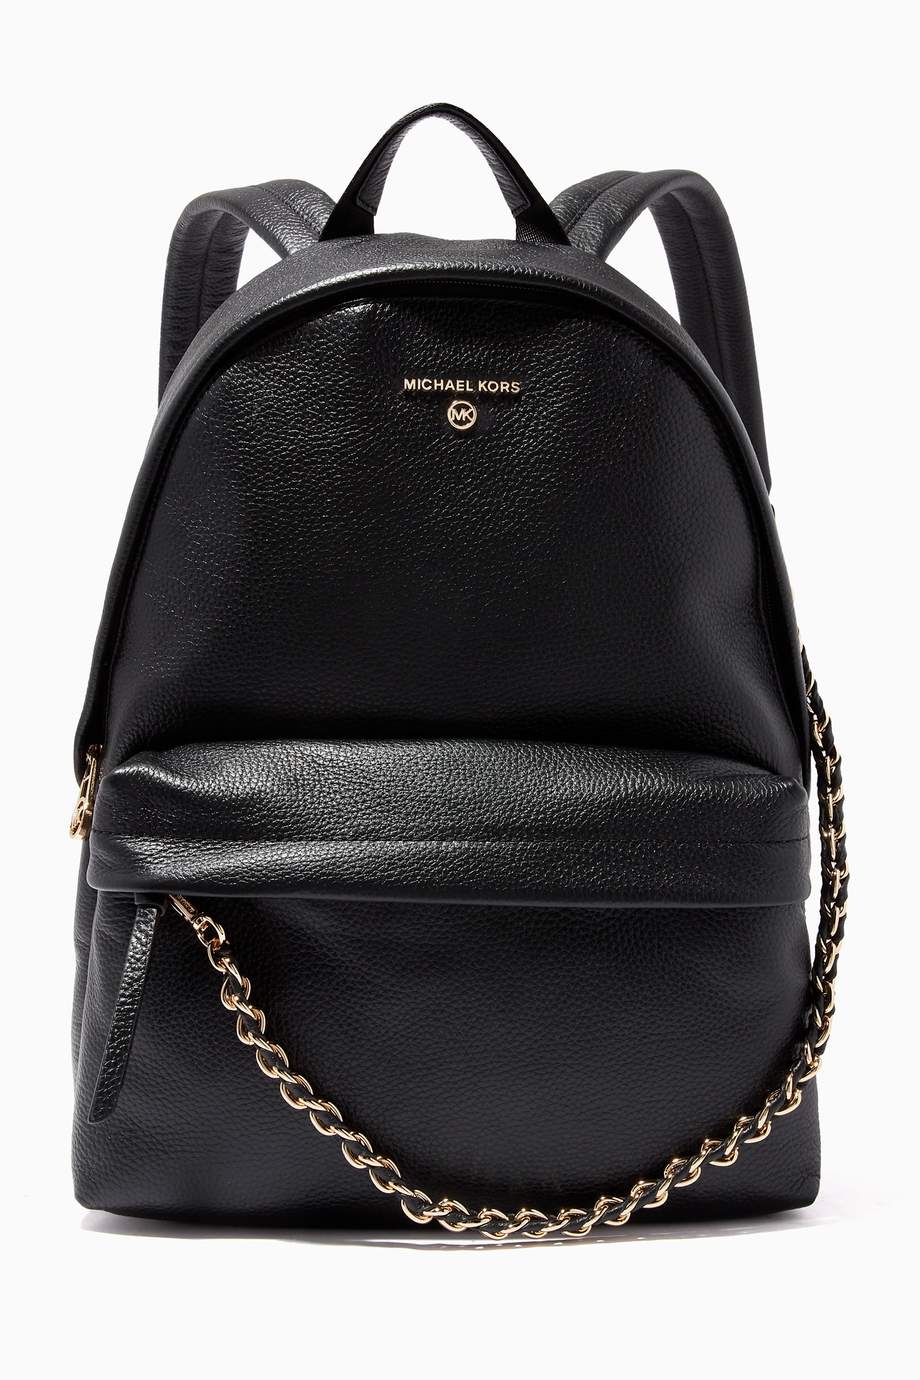 Shop Michael Kors Black Slater Large Backpack in Leather for Women ...